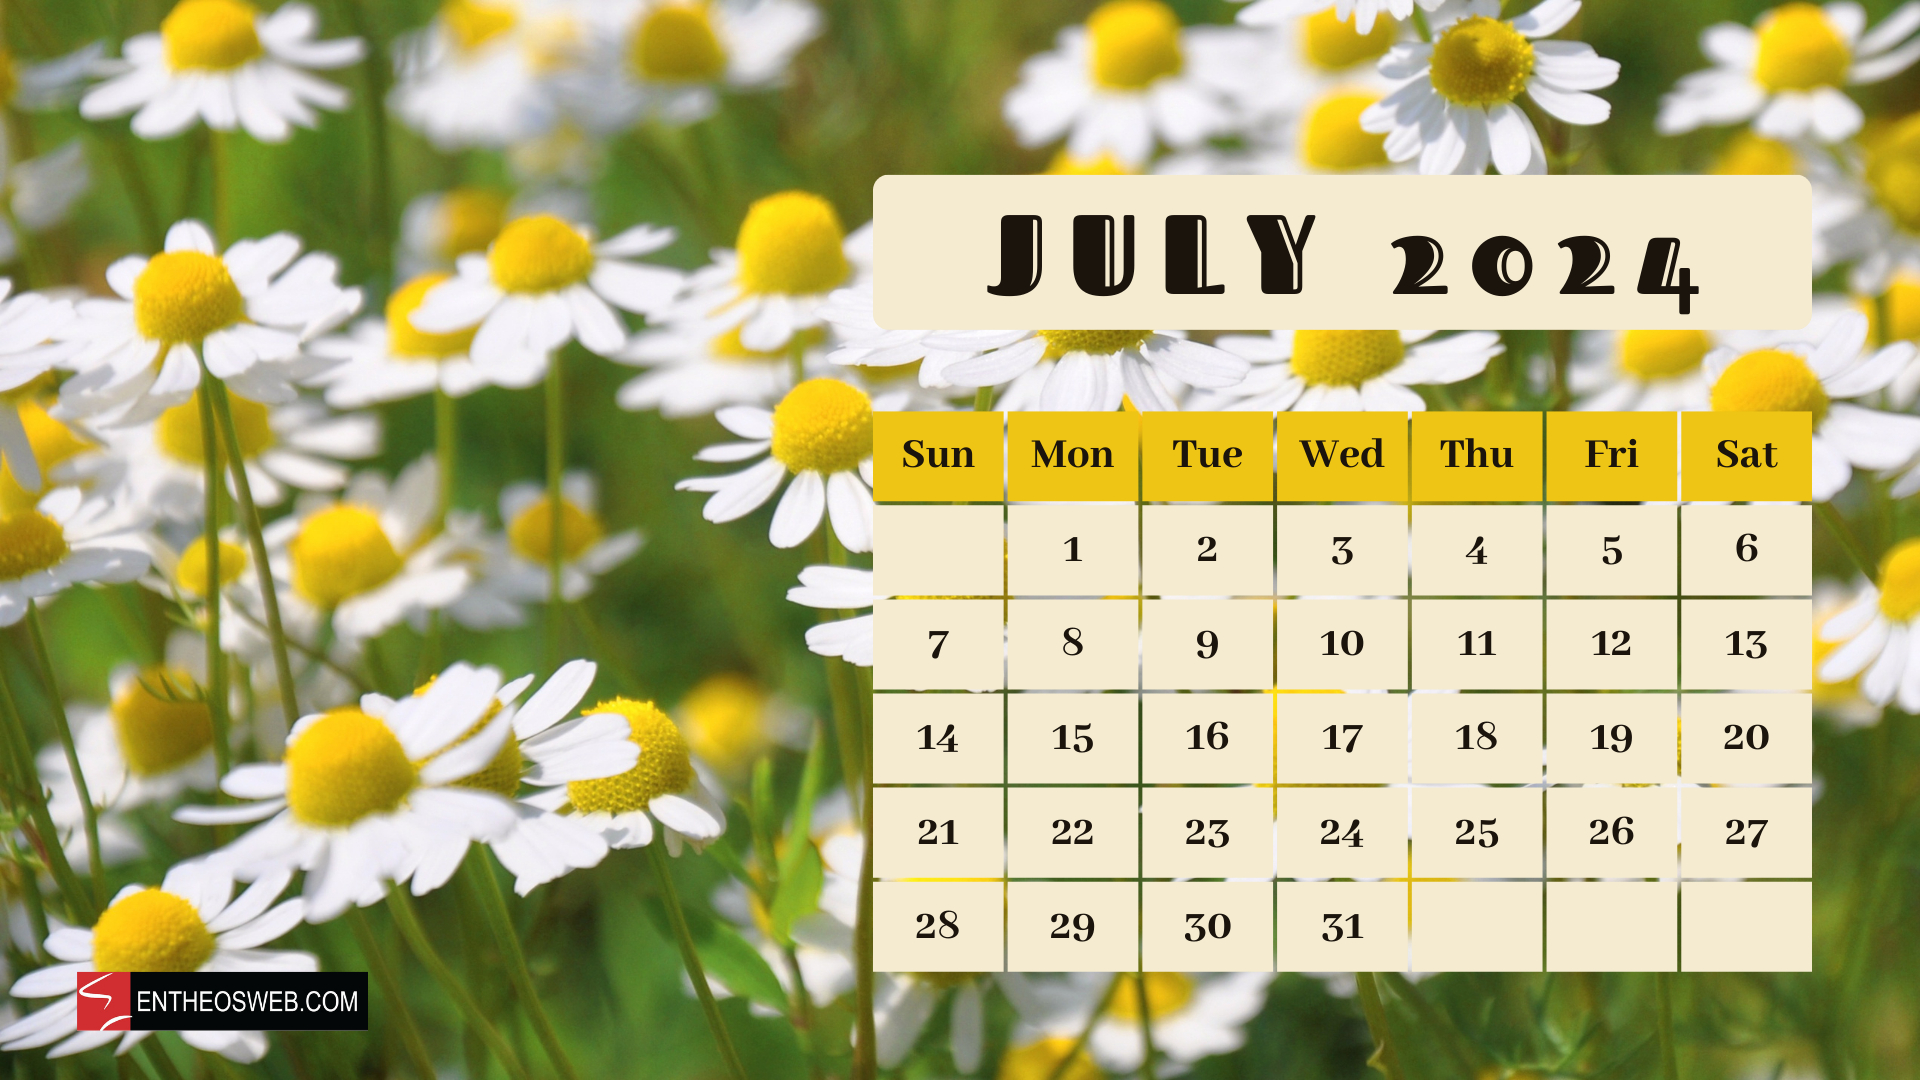 July 2024 Desktop Wallpaper Calendar | Entheosweb with July 2024 Desktop Calendar